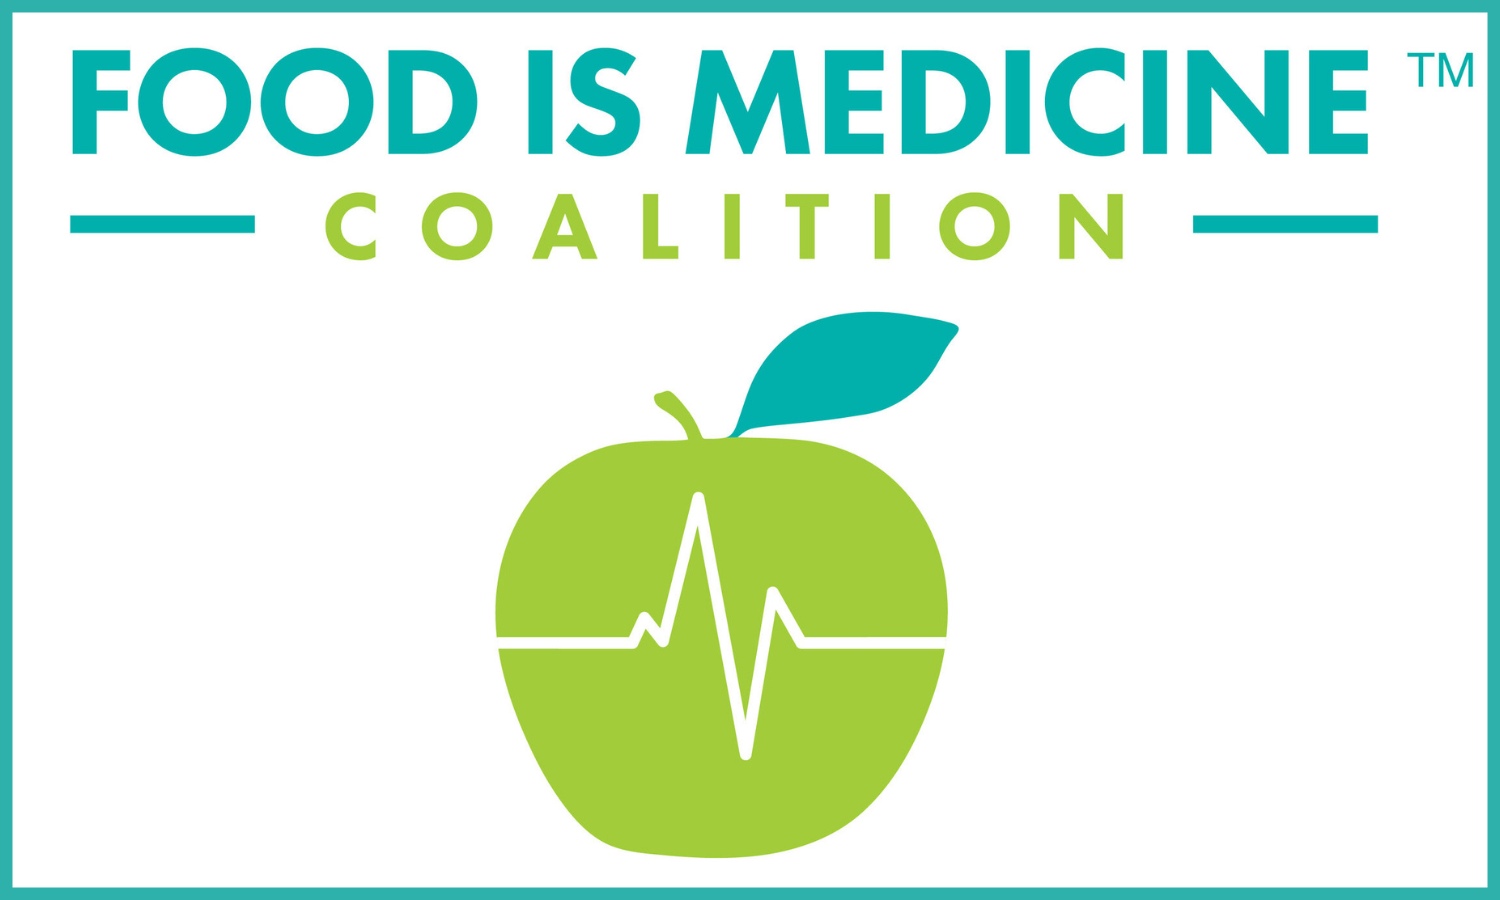 Food is medicine coalition logo